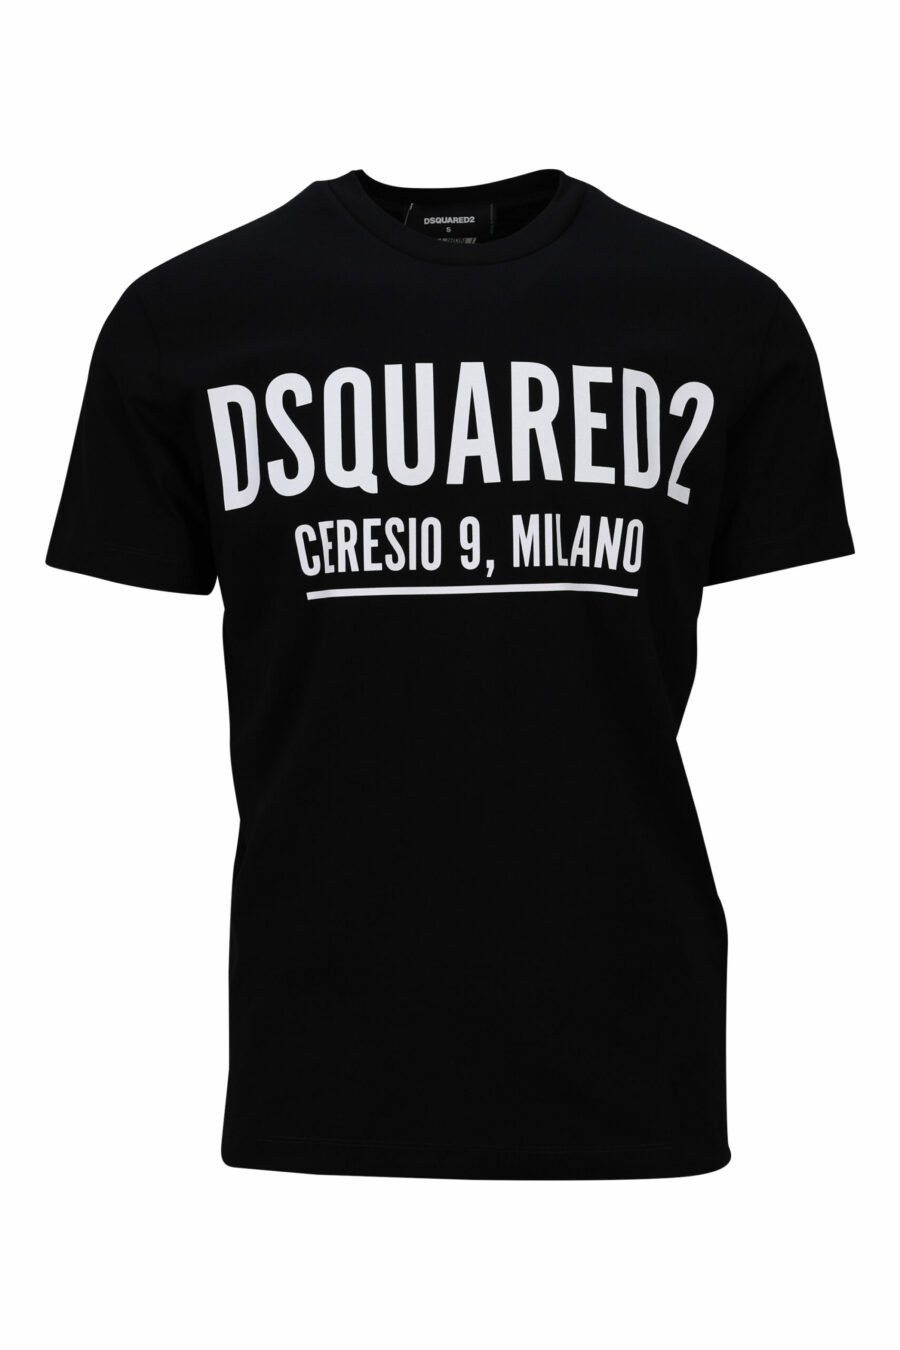 T-shirt noir avec maxilogo "ceresio 9 milano" - 8054148504984 scaled